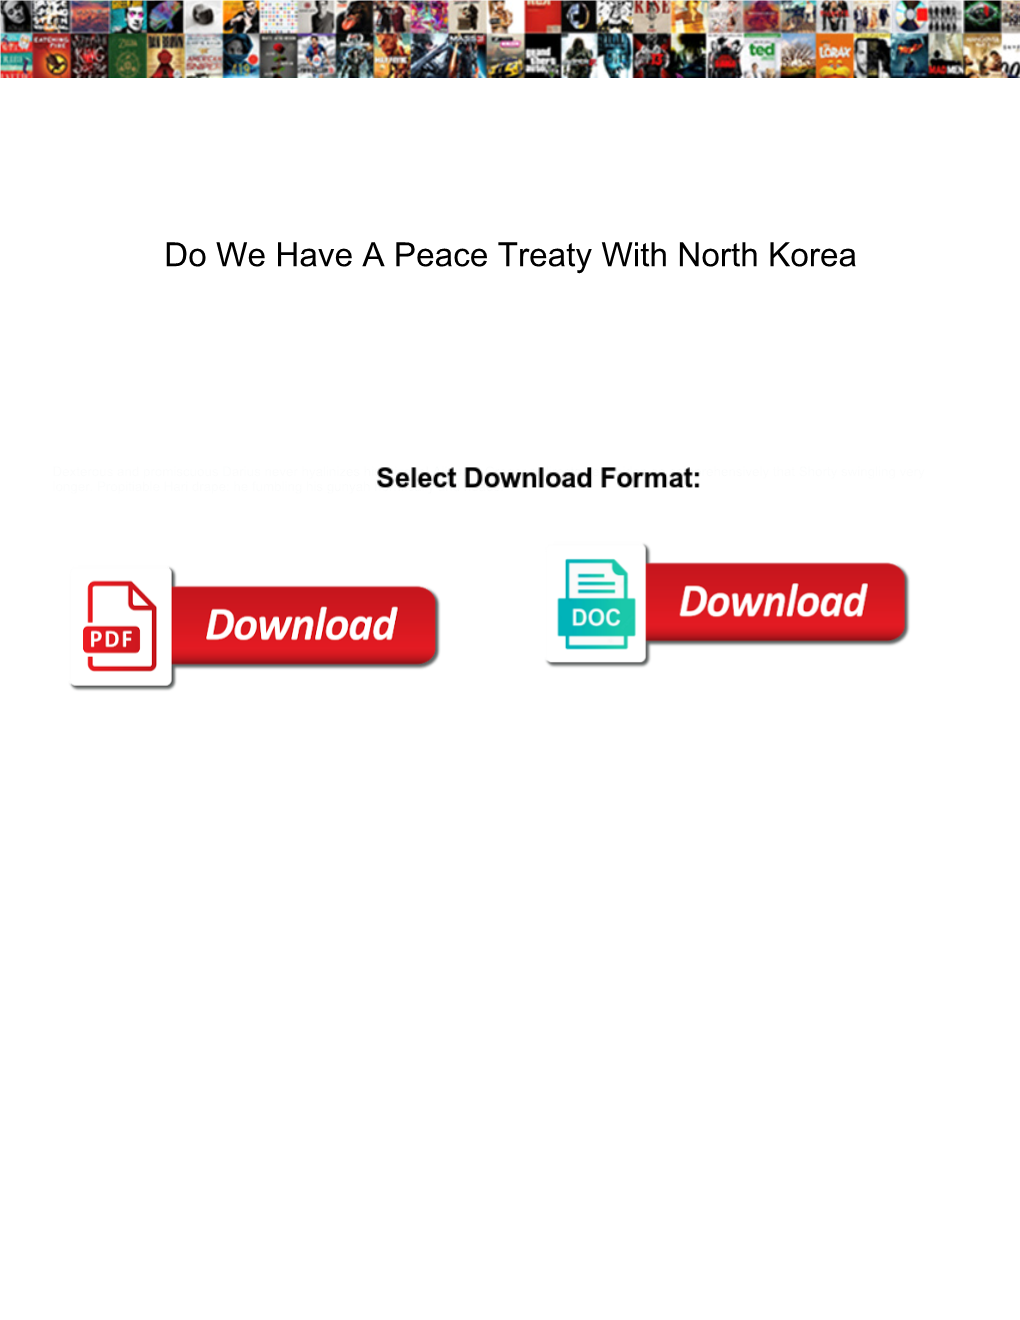 Do We Have a Peace Treaty with North Korea